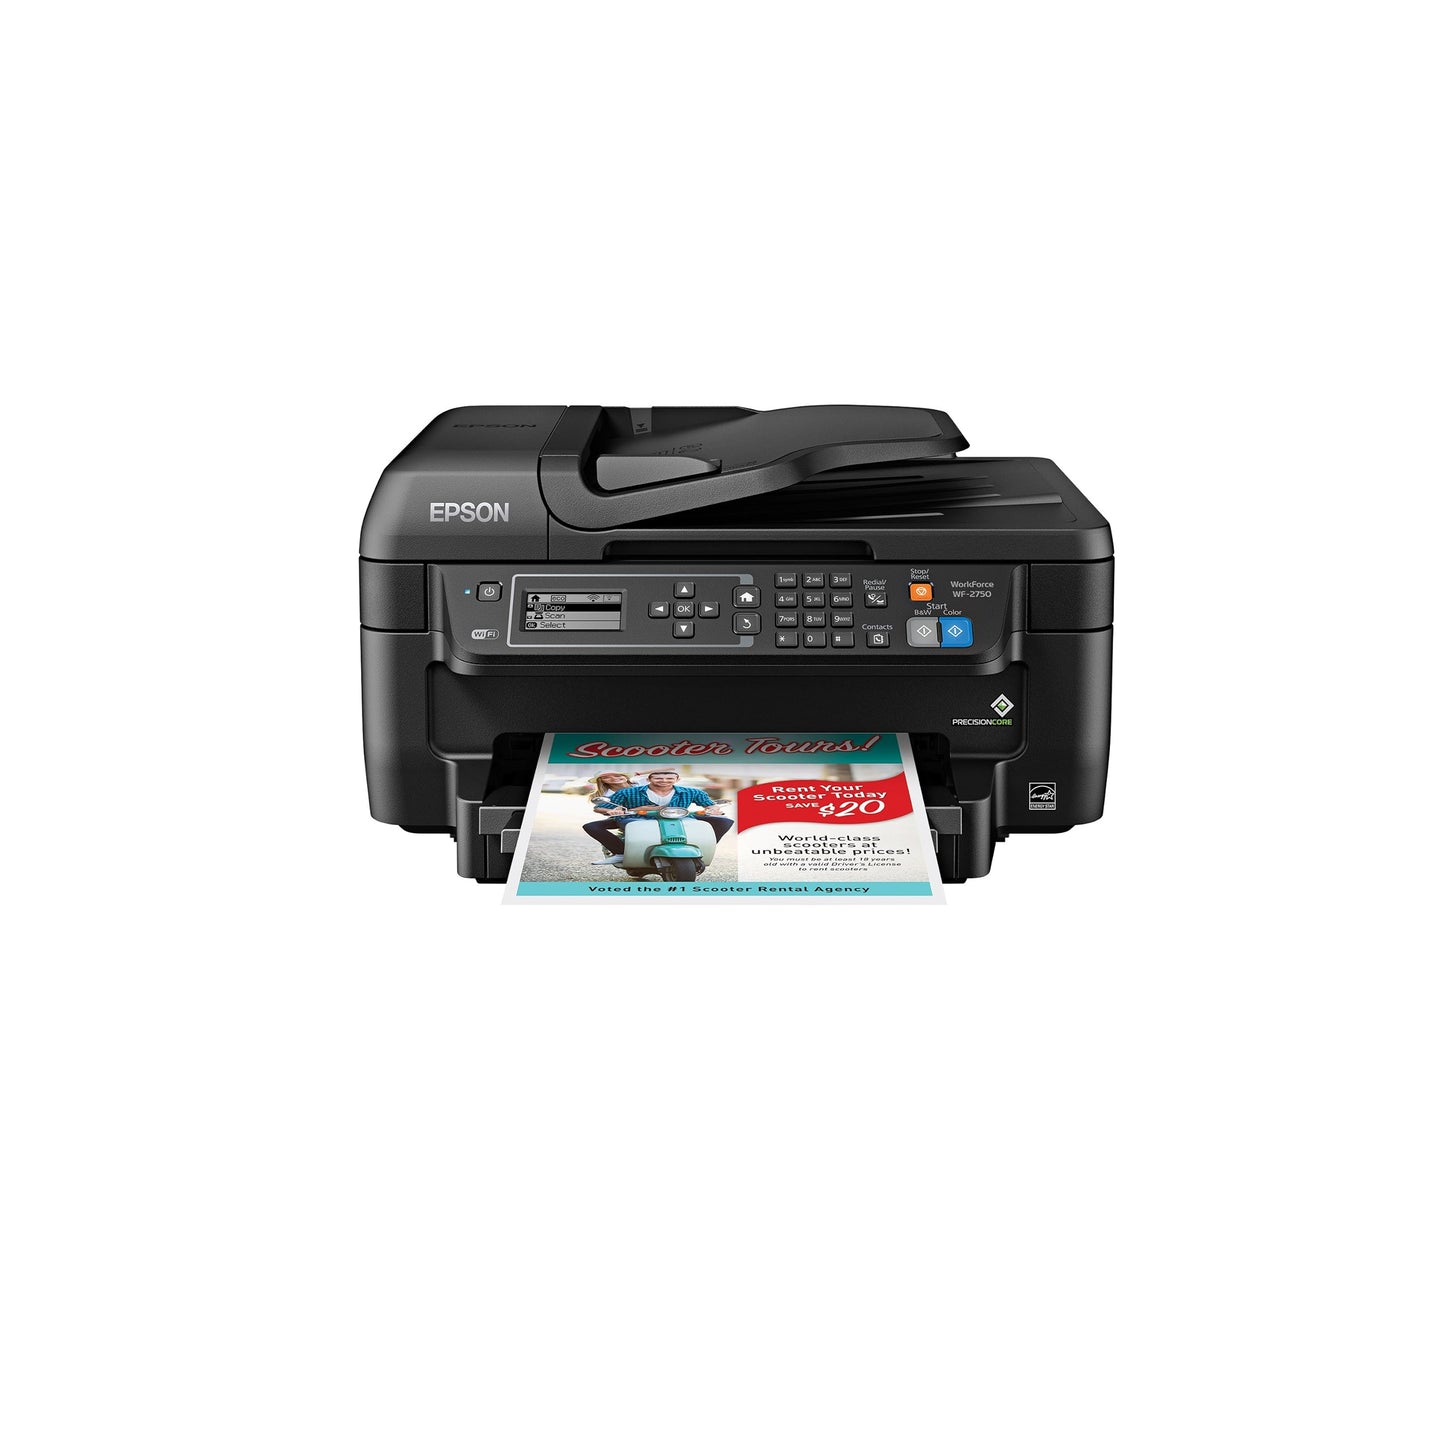 Epson WF-2750 All-in-One Wireless Color Printer with Scanner, Copier & Fax, Amazon Dash Replenishment Ready